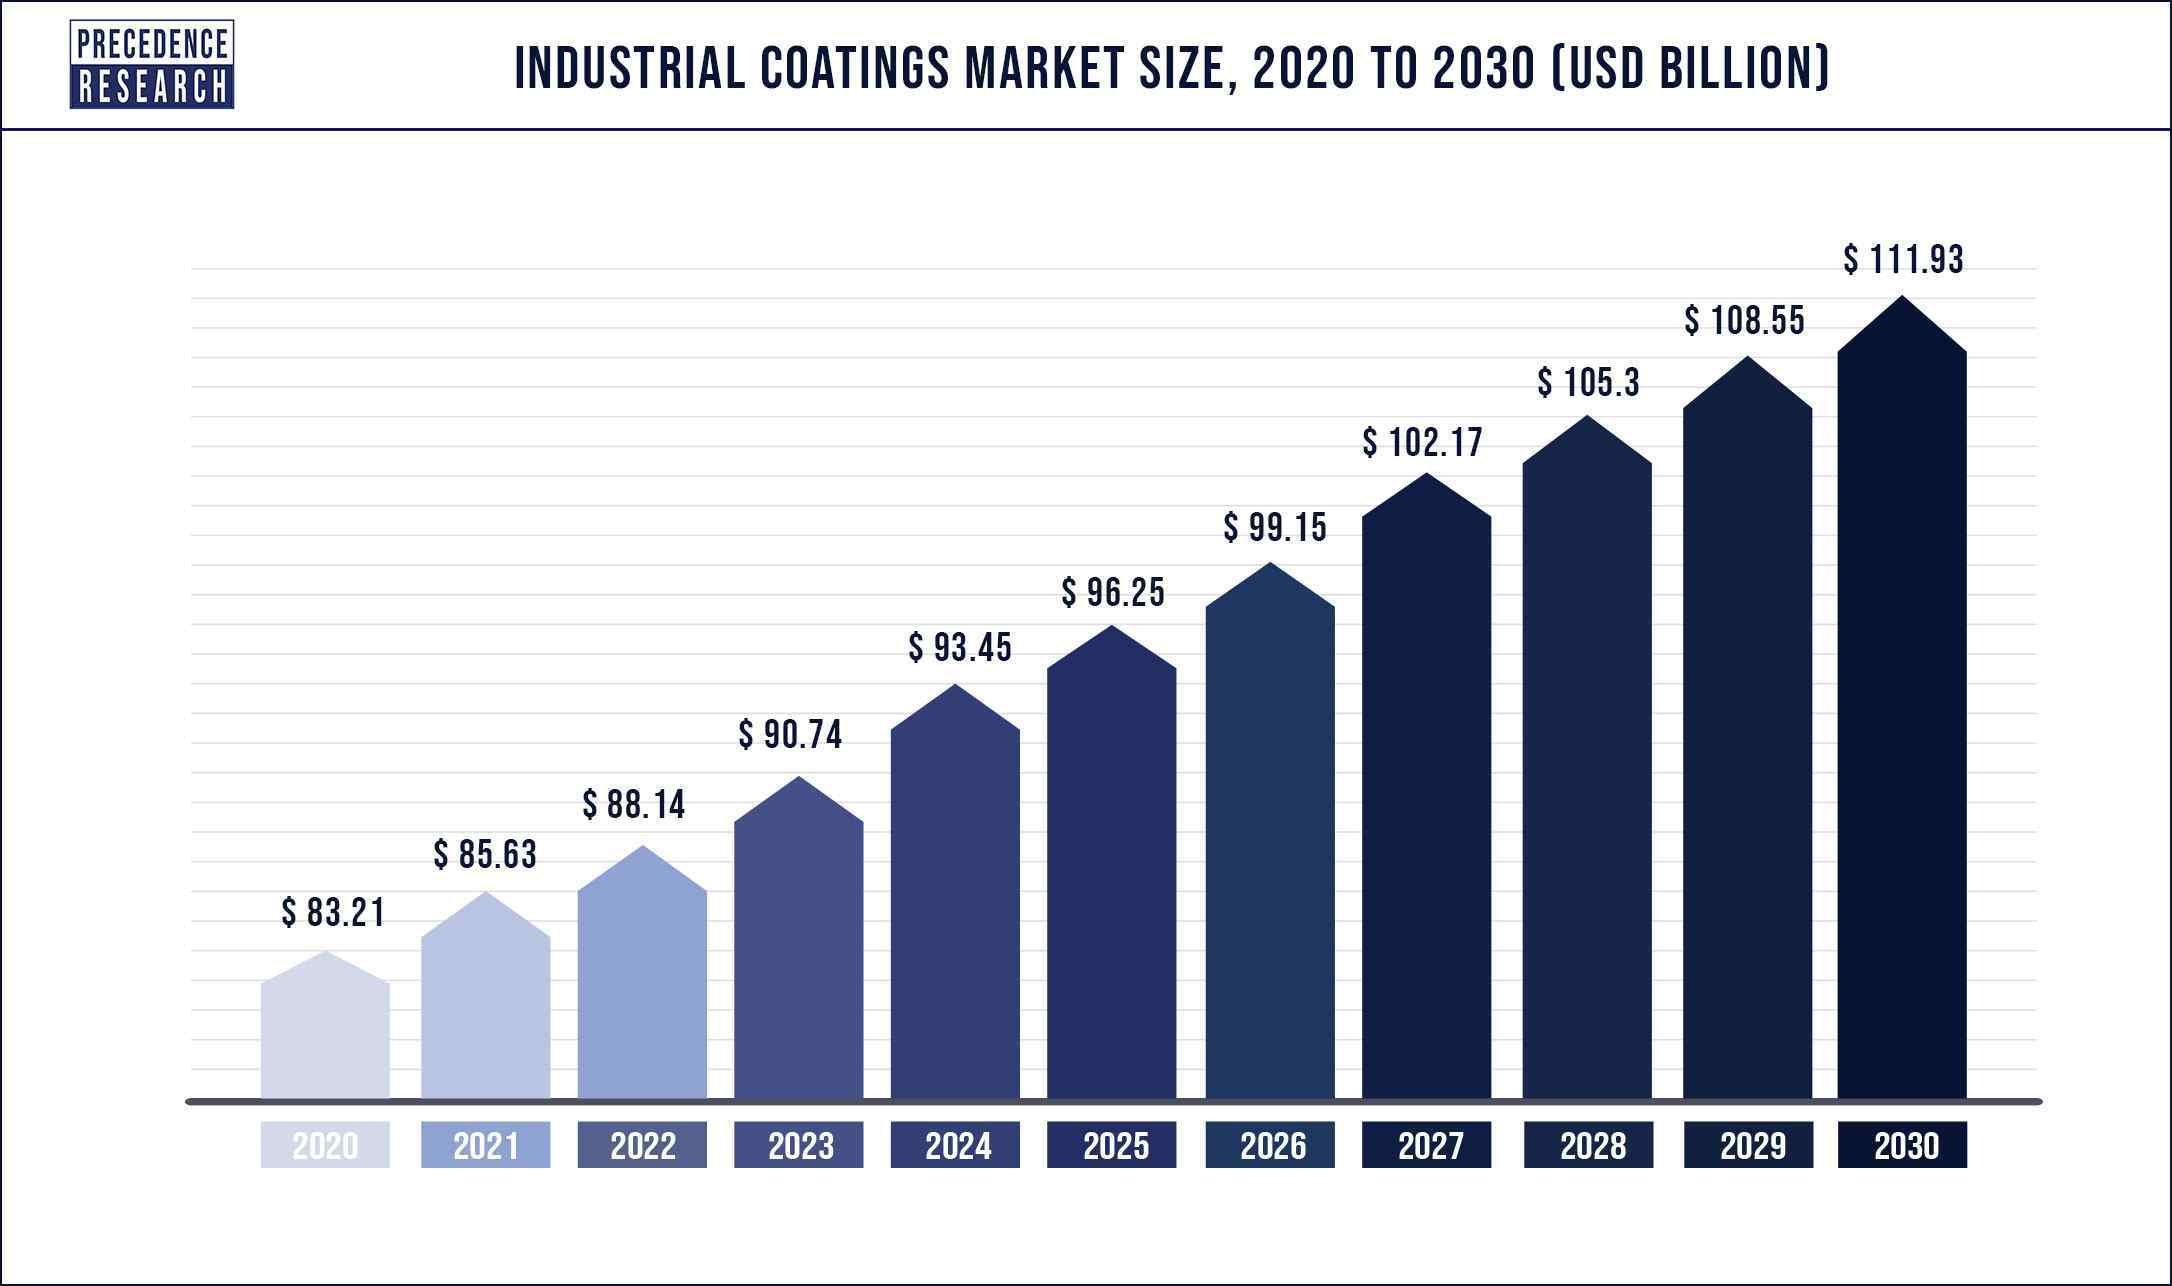 Industrial Coatings Market Size 2020-2030